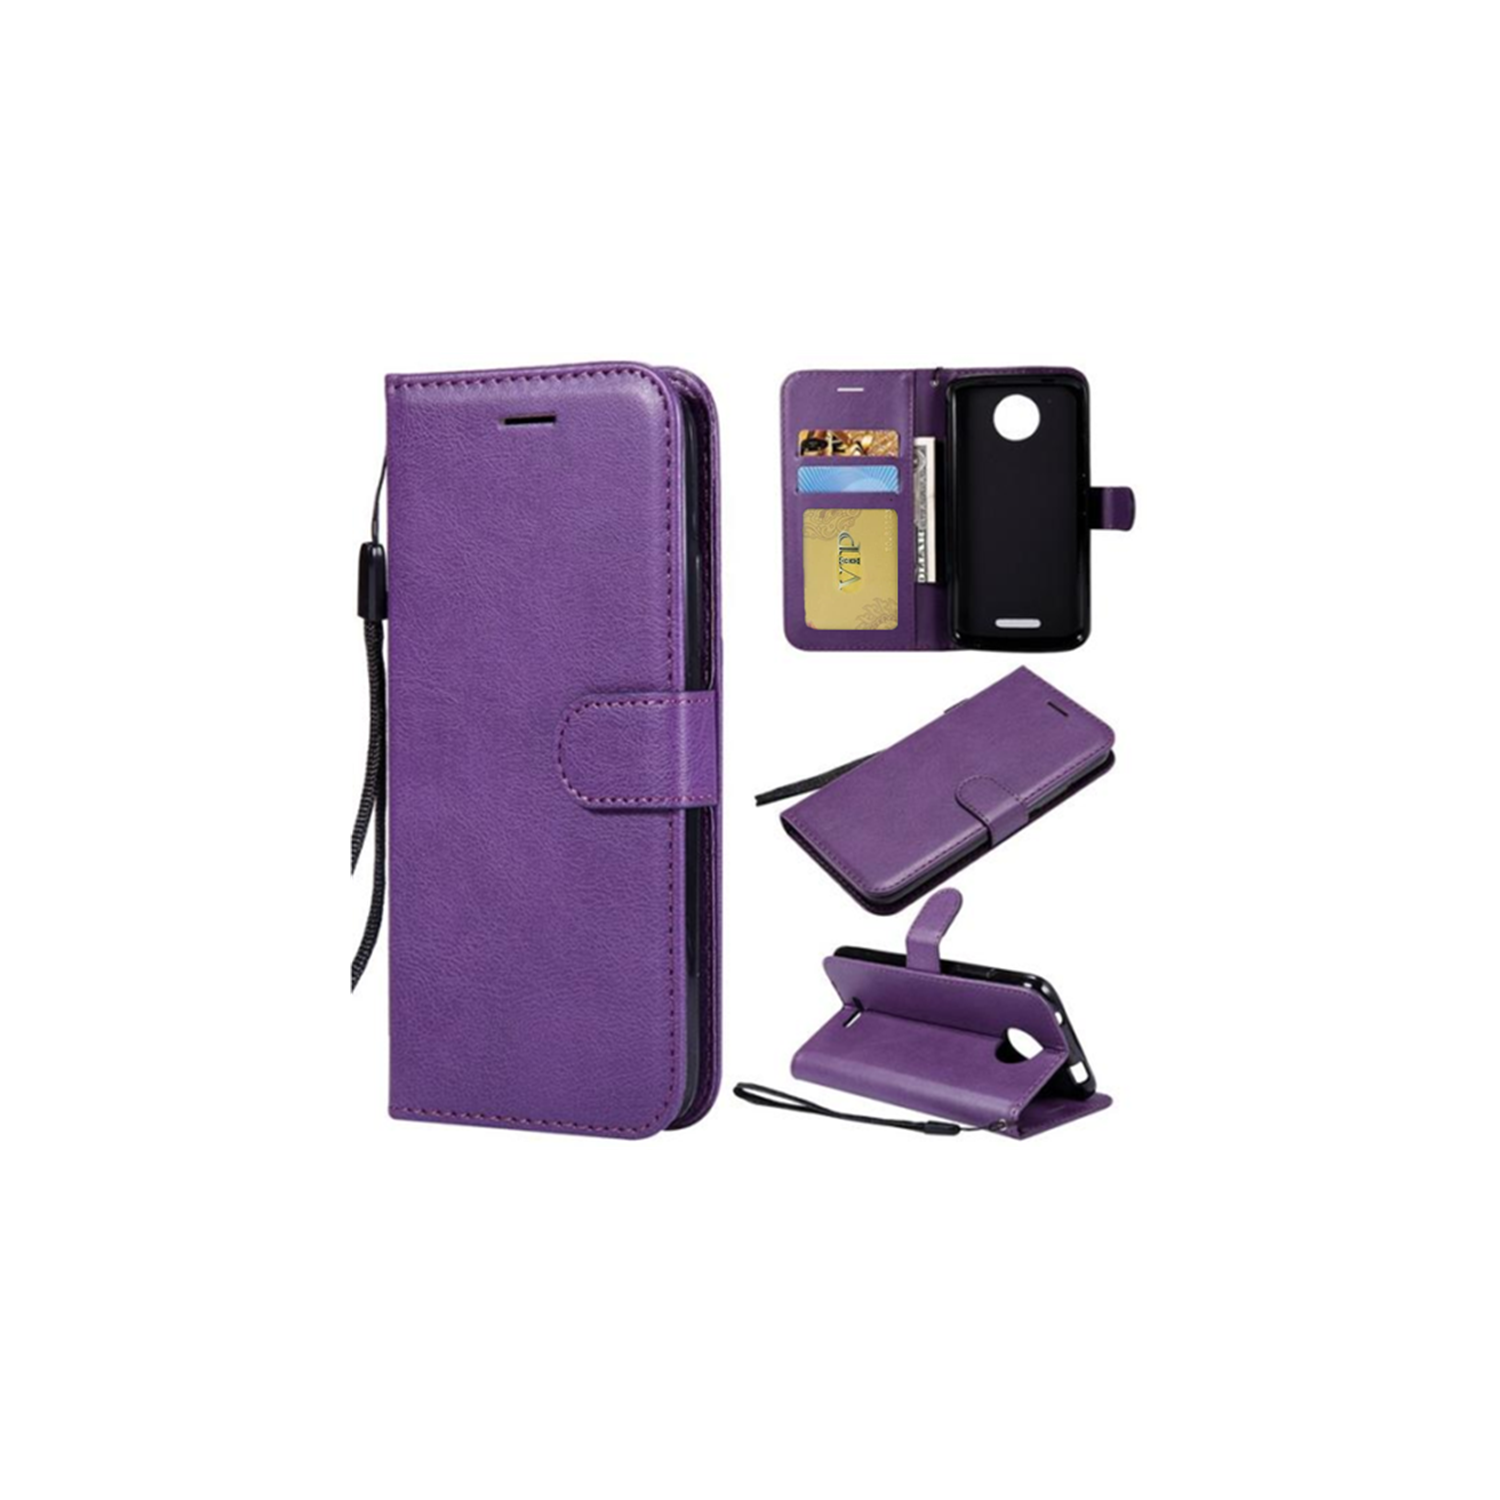 [CS] Motorola Moto Z3 Play Case, Magnetic Leather Folio Wallet Flip Case Cover with Card Slot, Purple